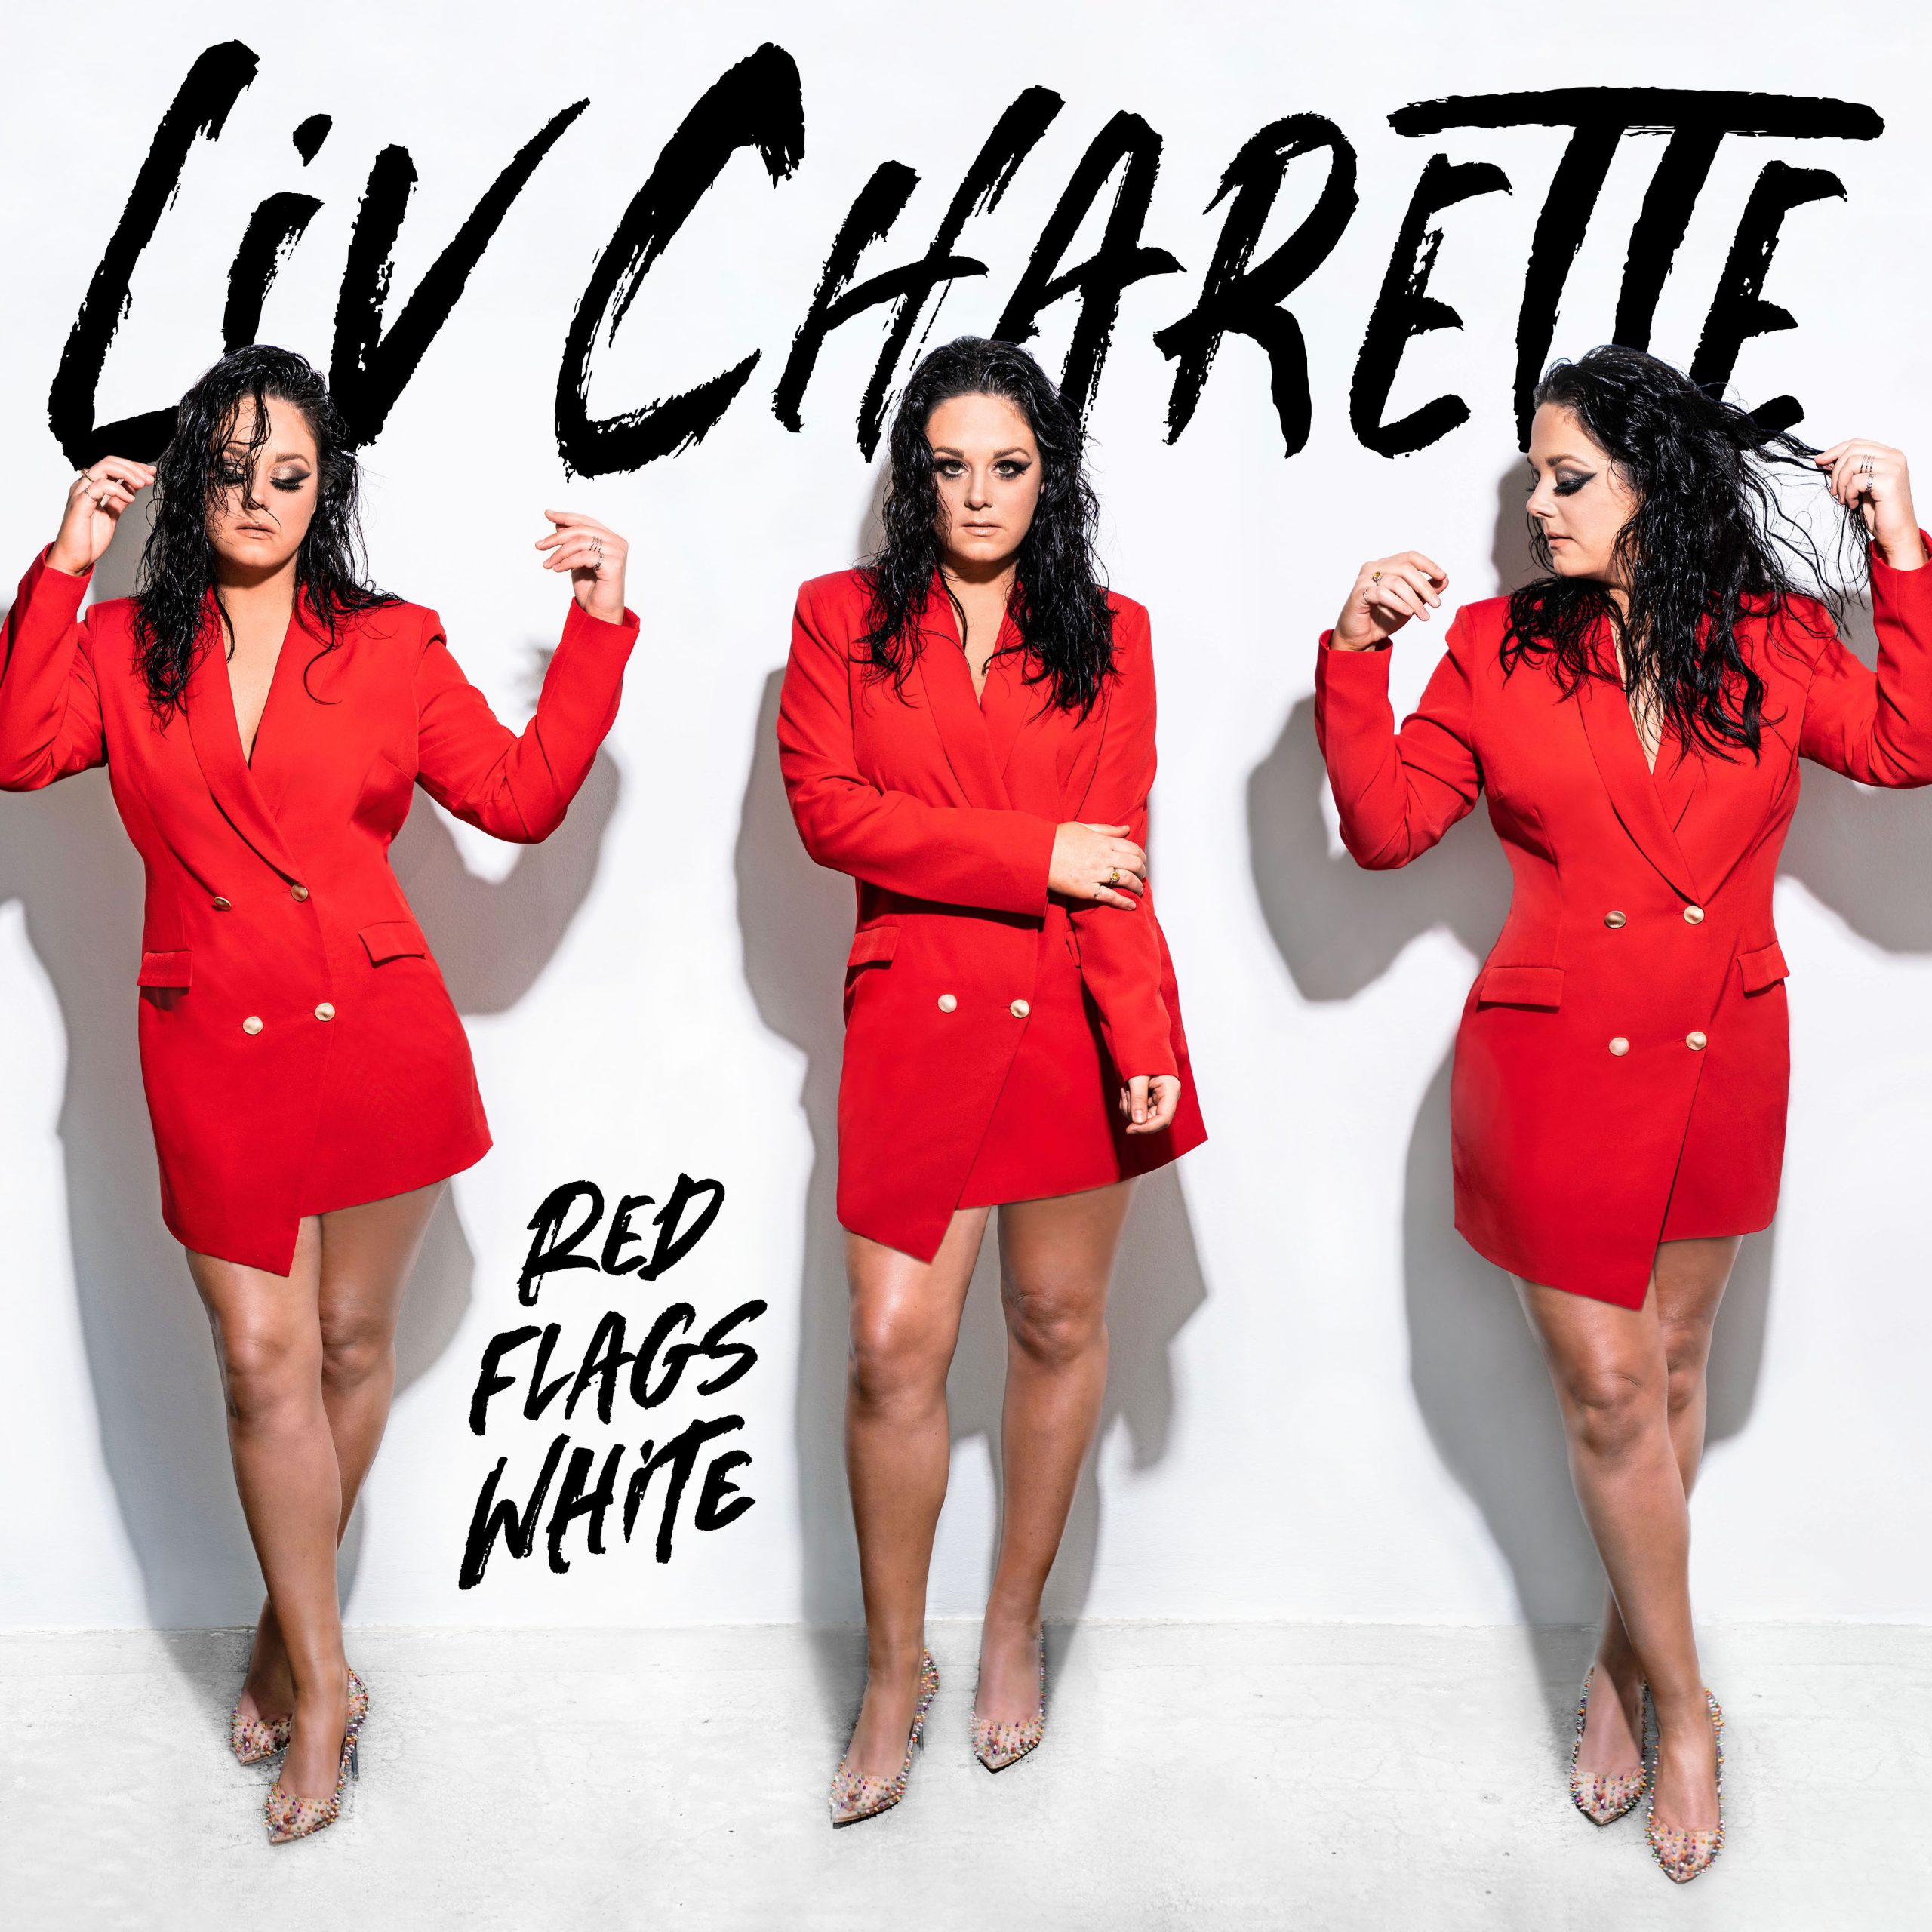 Liv Charette - Red Flags White